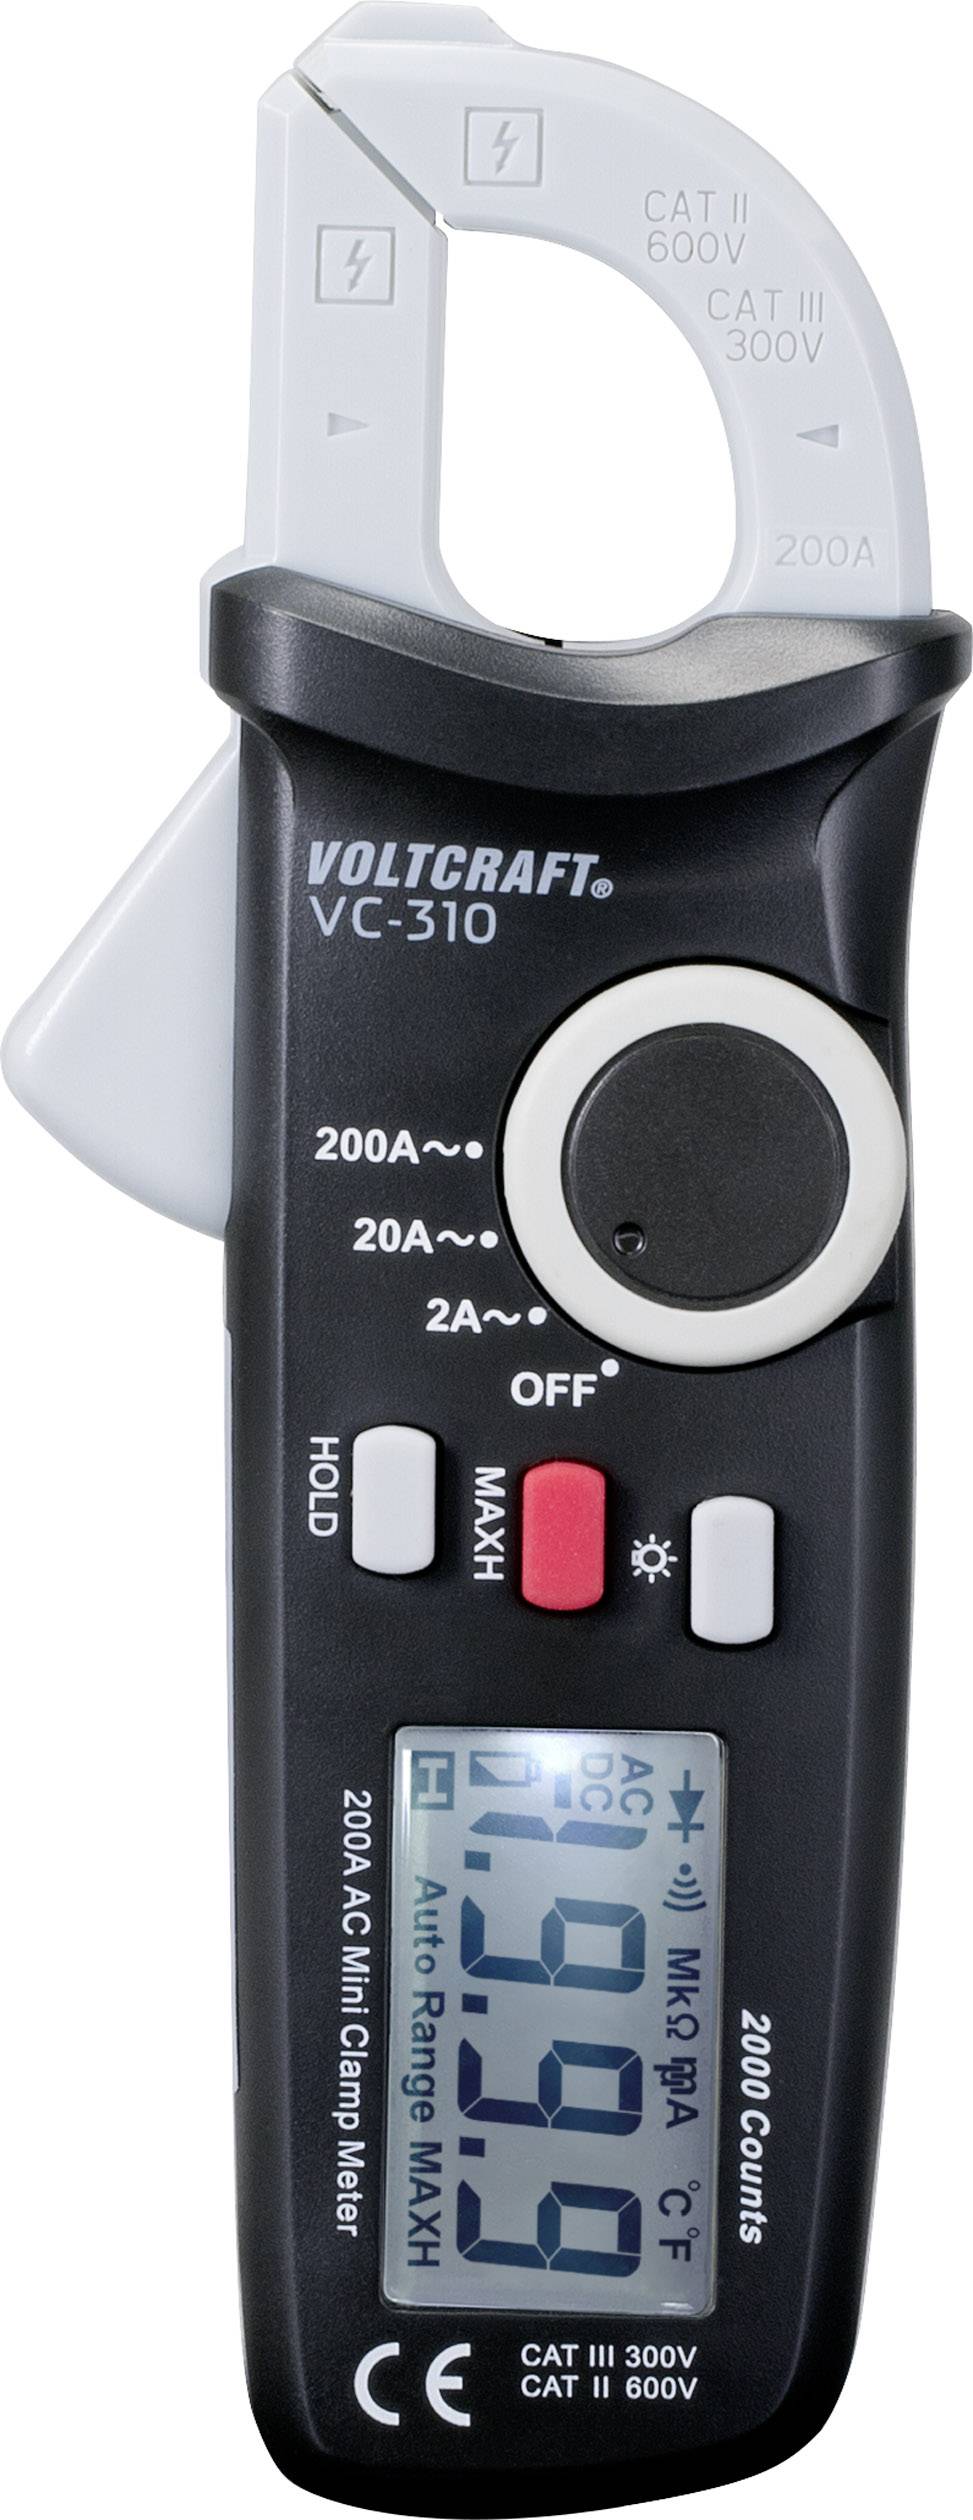 VOLTCRAFT Stromzange digital VOLTCRAFT VC-310 Kalibriert nach: Werksstandard CAT II 600 V, CAT III 3